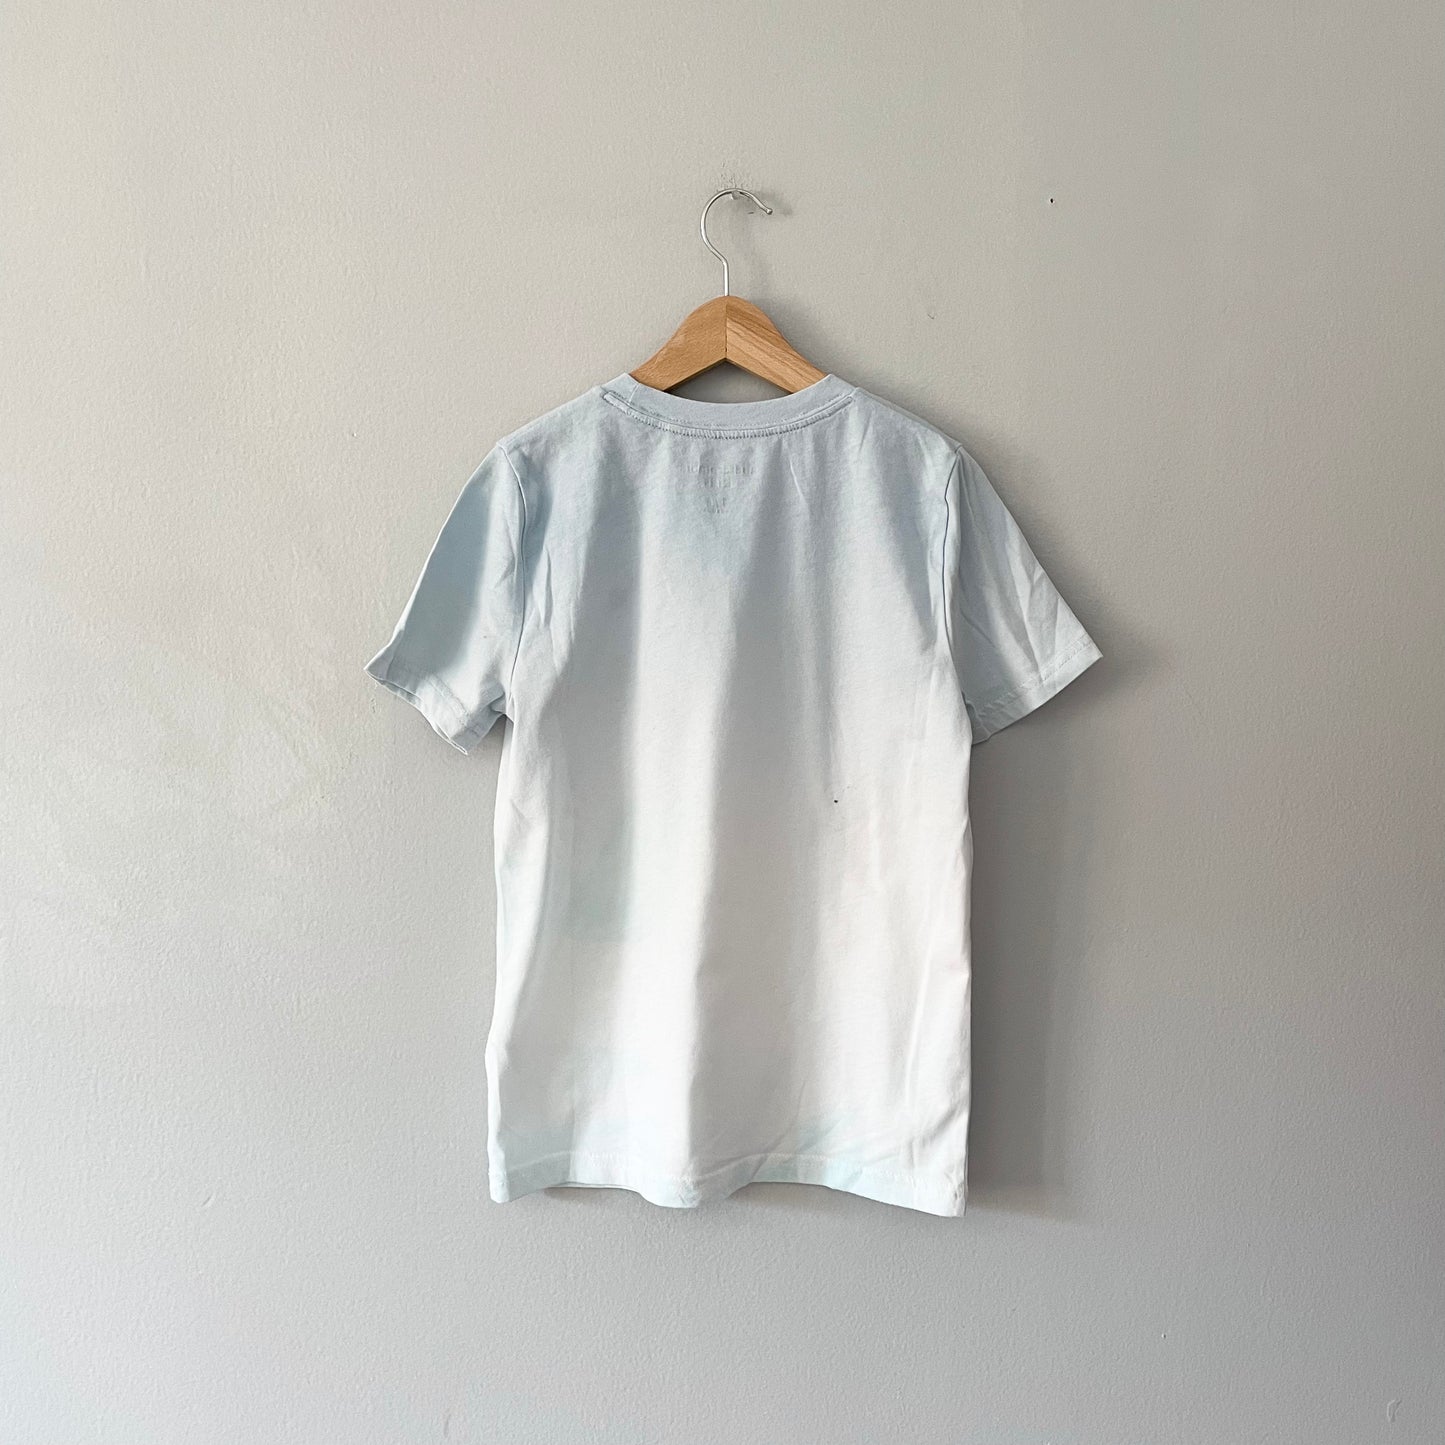 Abercrombie Kids / T-shirt / 7-8Y